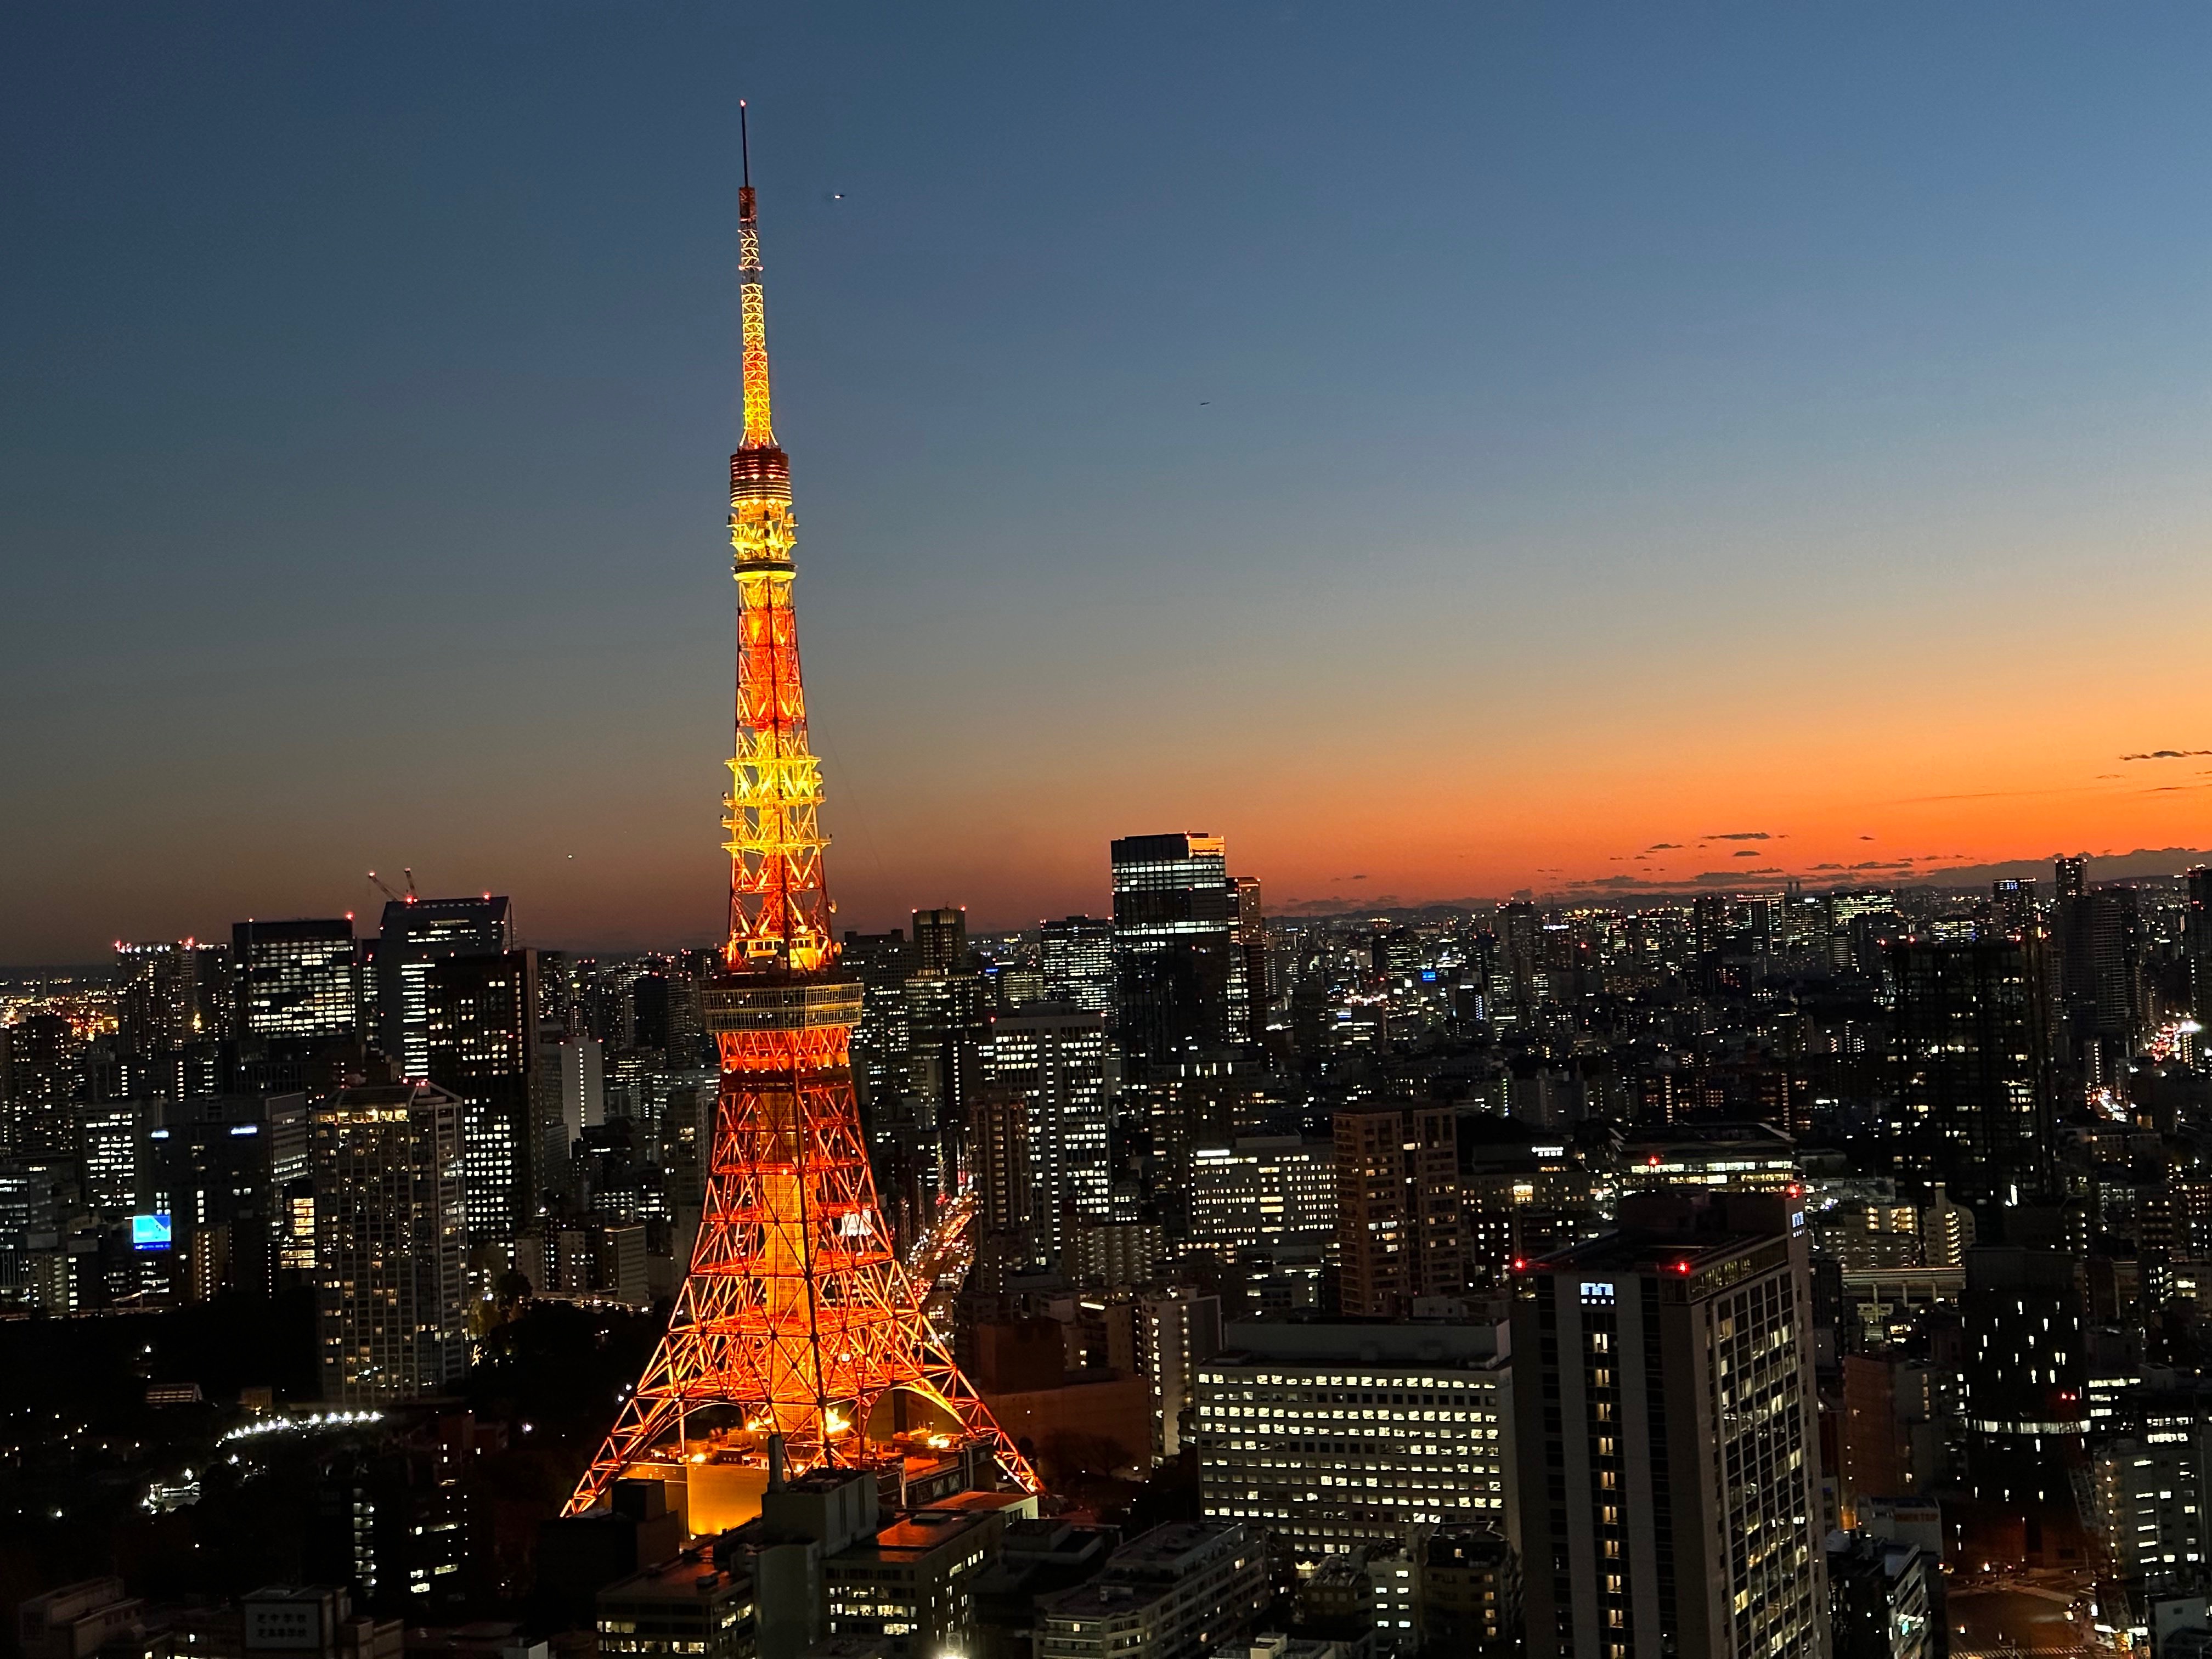 THE TOKYO LOUIS VUITTON CITY GUIDE - News